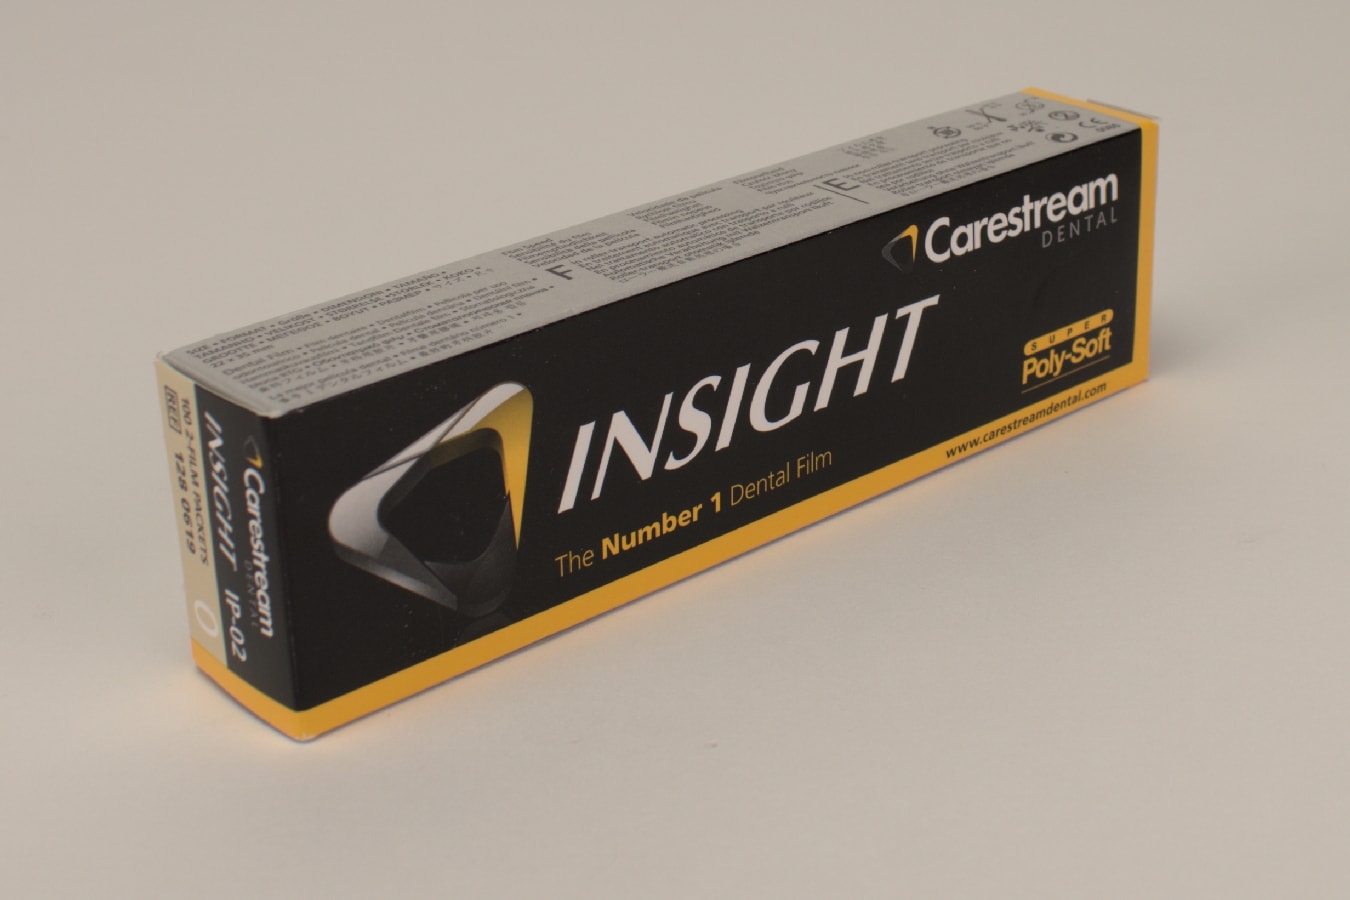 Röntgenfilm Insight IP-02 22x35mm 100D